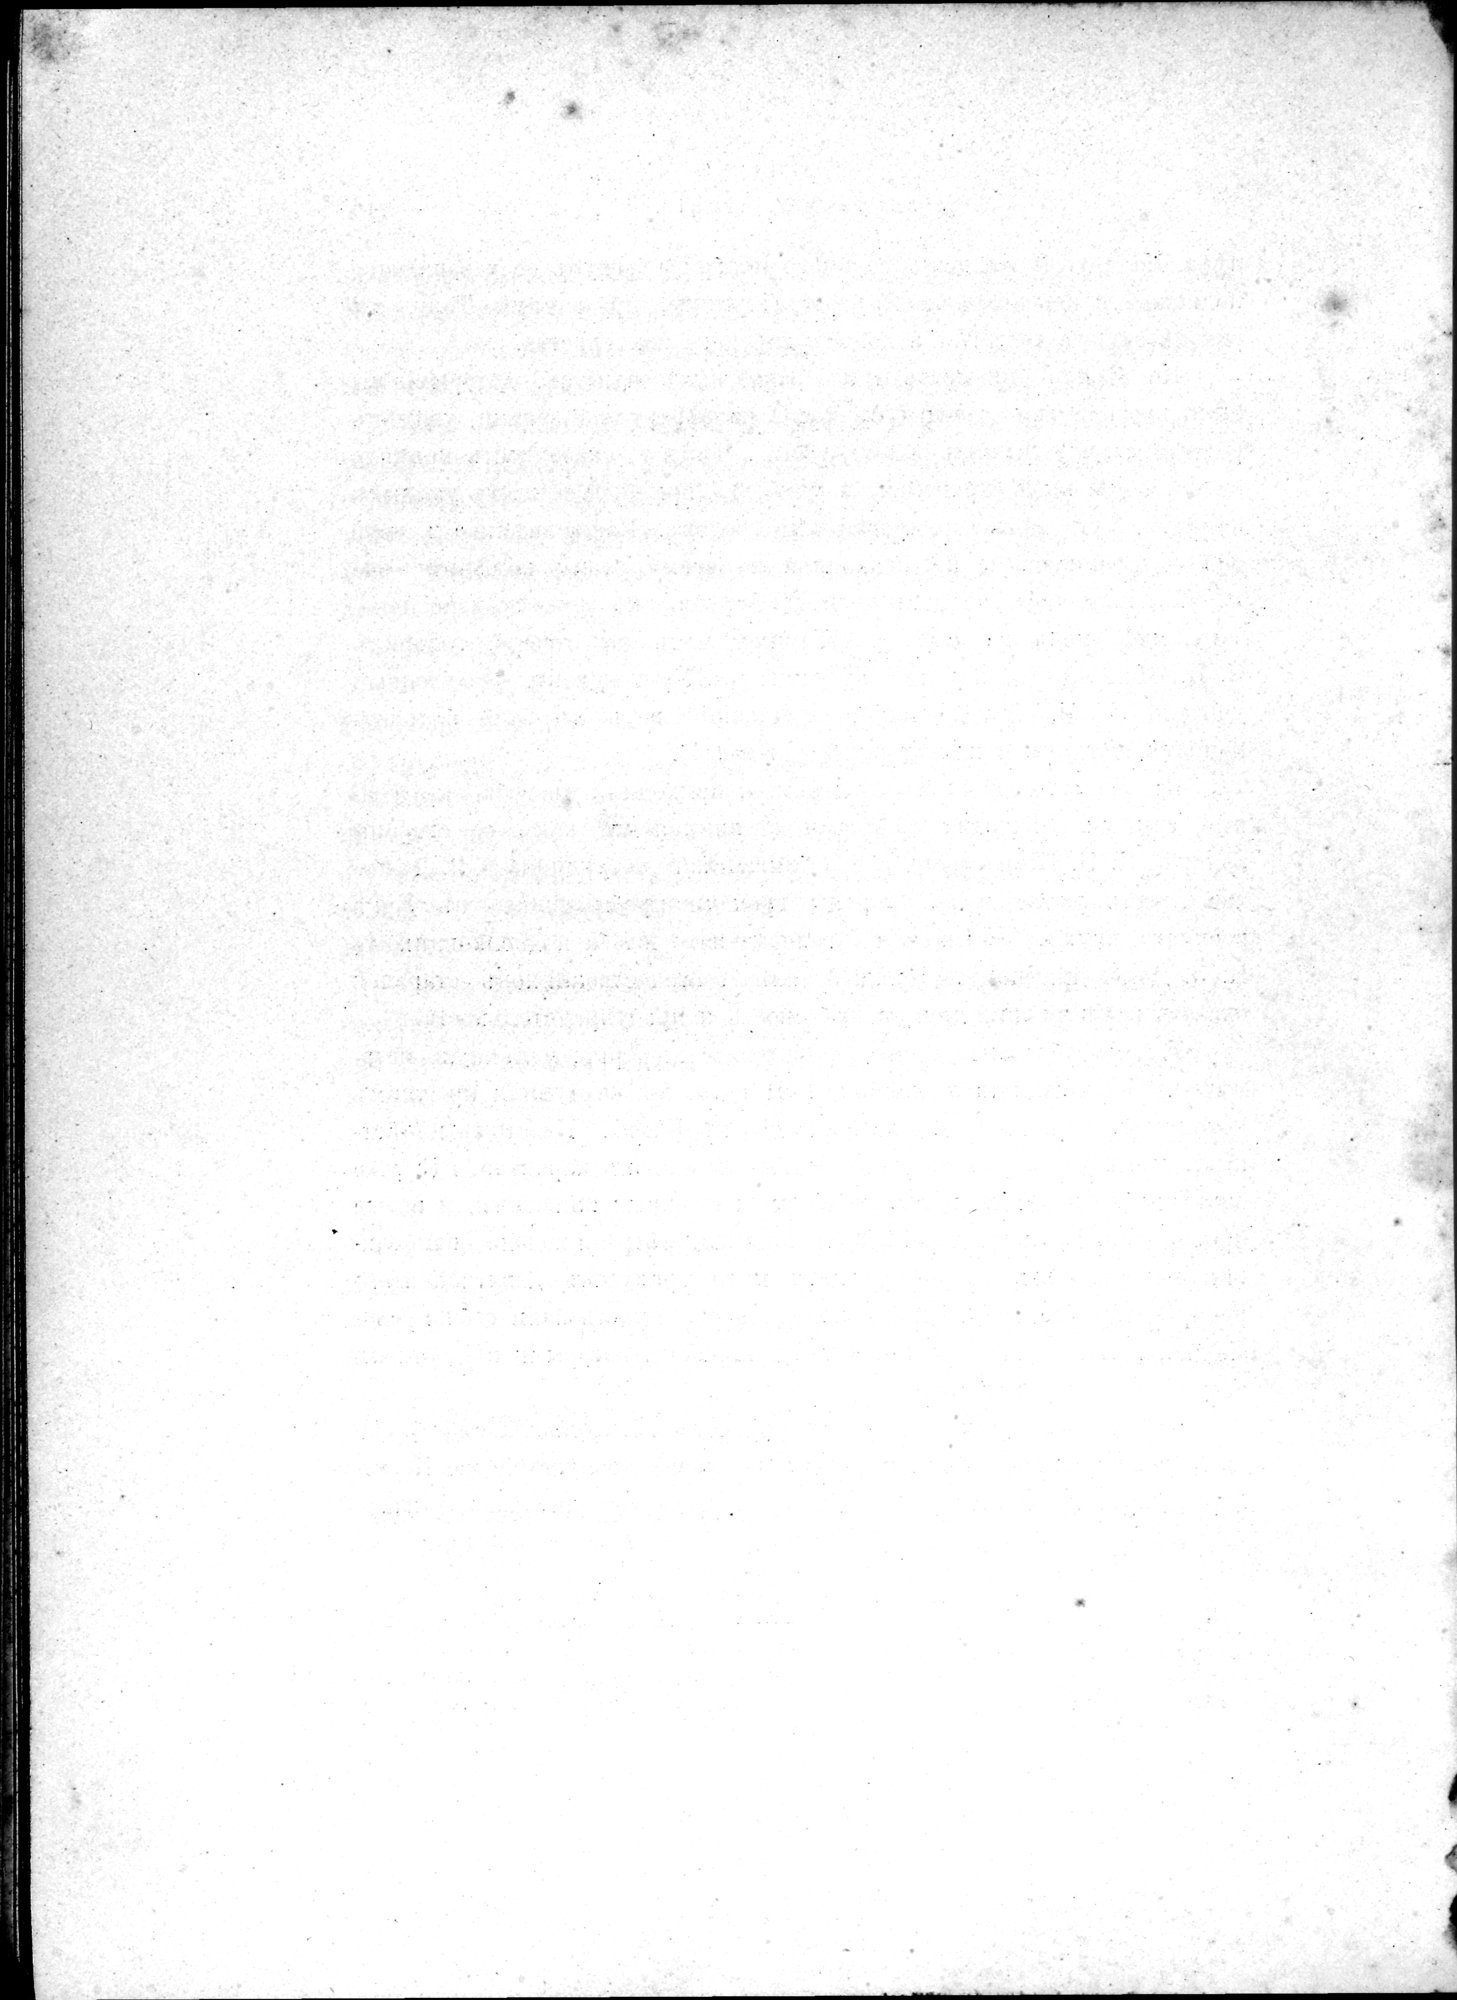 Mongoliia i Kam : vol.2 / Page 558 (Grayscale High Resolution Image)